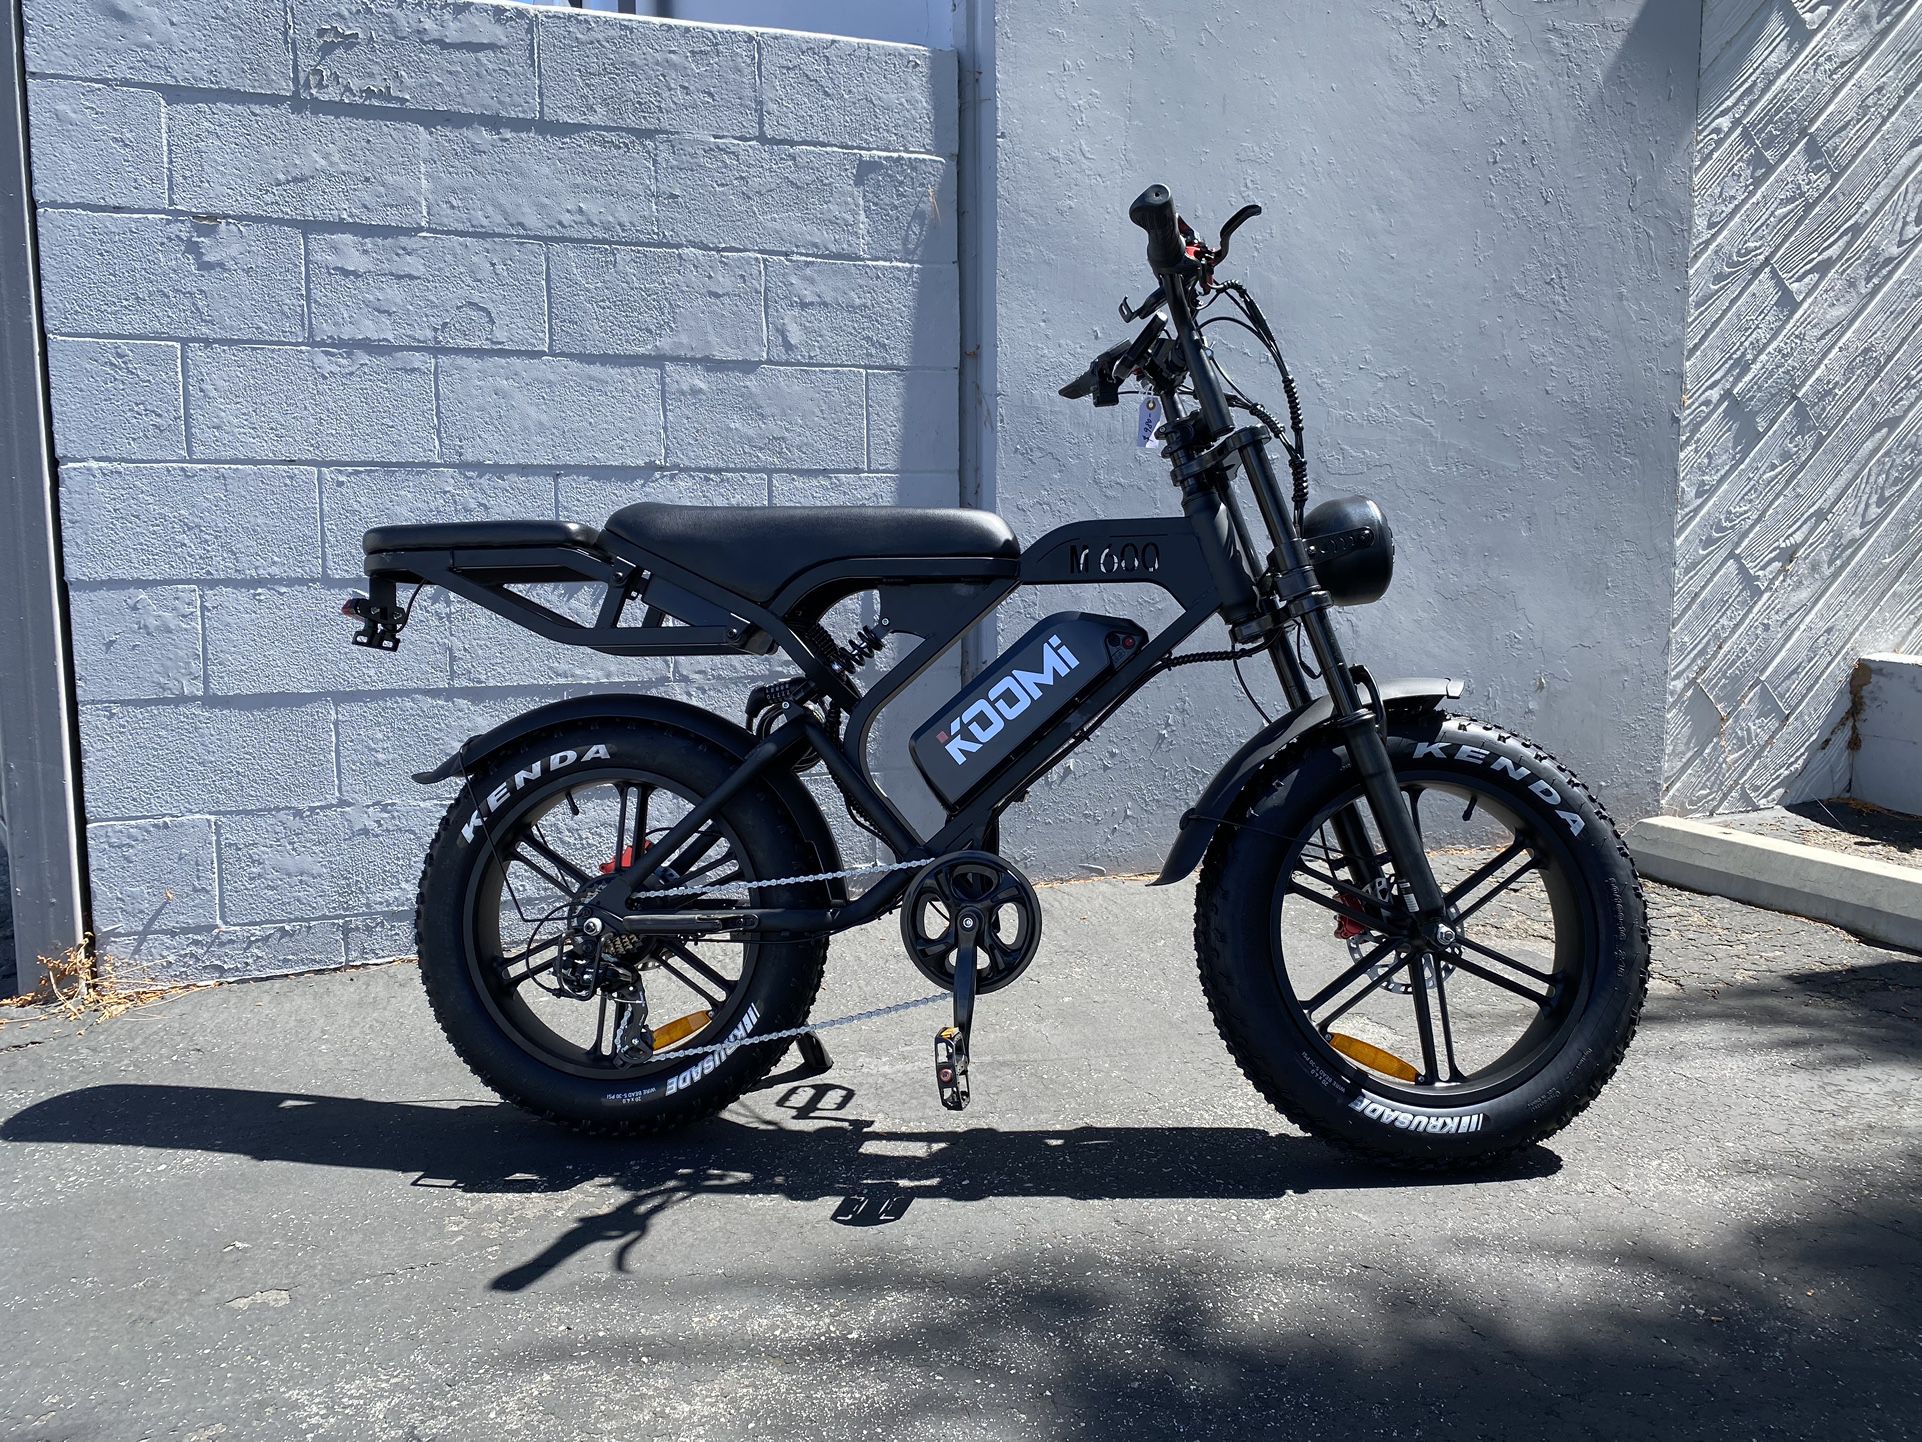 New. Retro moped e-bike 1000w 48v 20Ah hydraulic disc brakes top speed 31mph full suspension, electric bike 